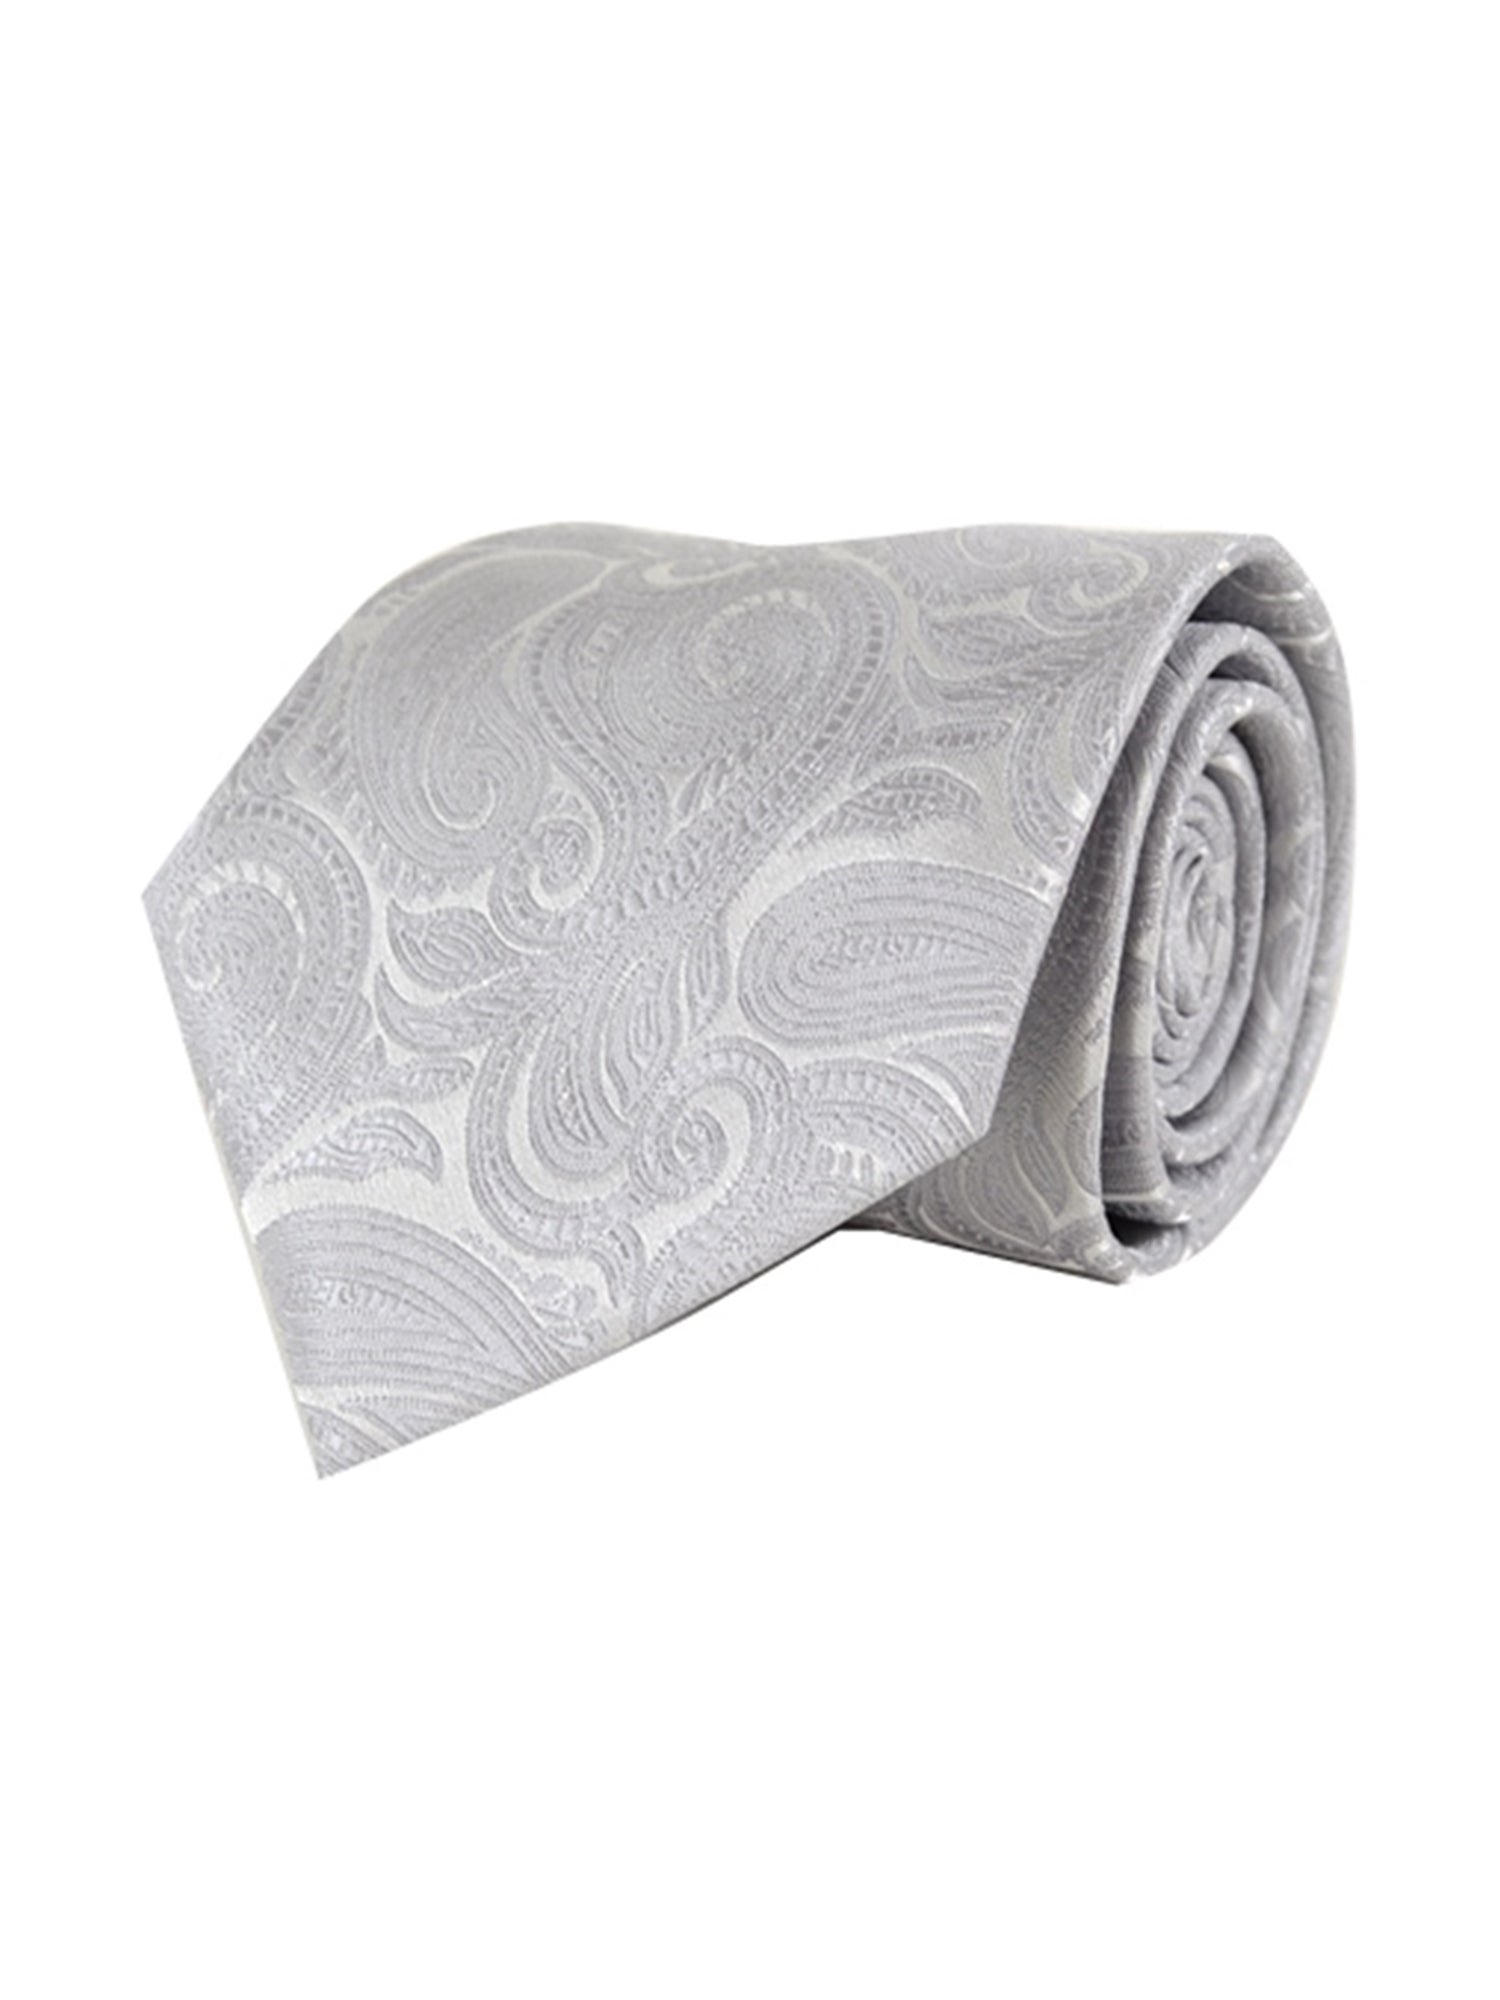 Men's Paisley Microfiber Poly Woven Wedding Neck Tie Neck Tie TheDapperTie Silver Regular 